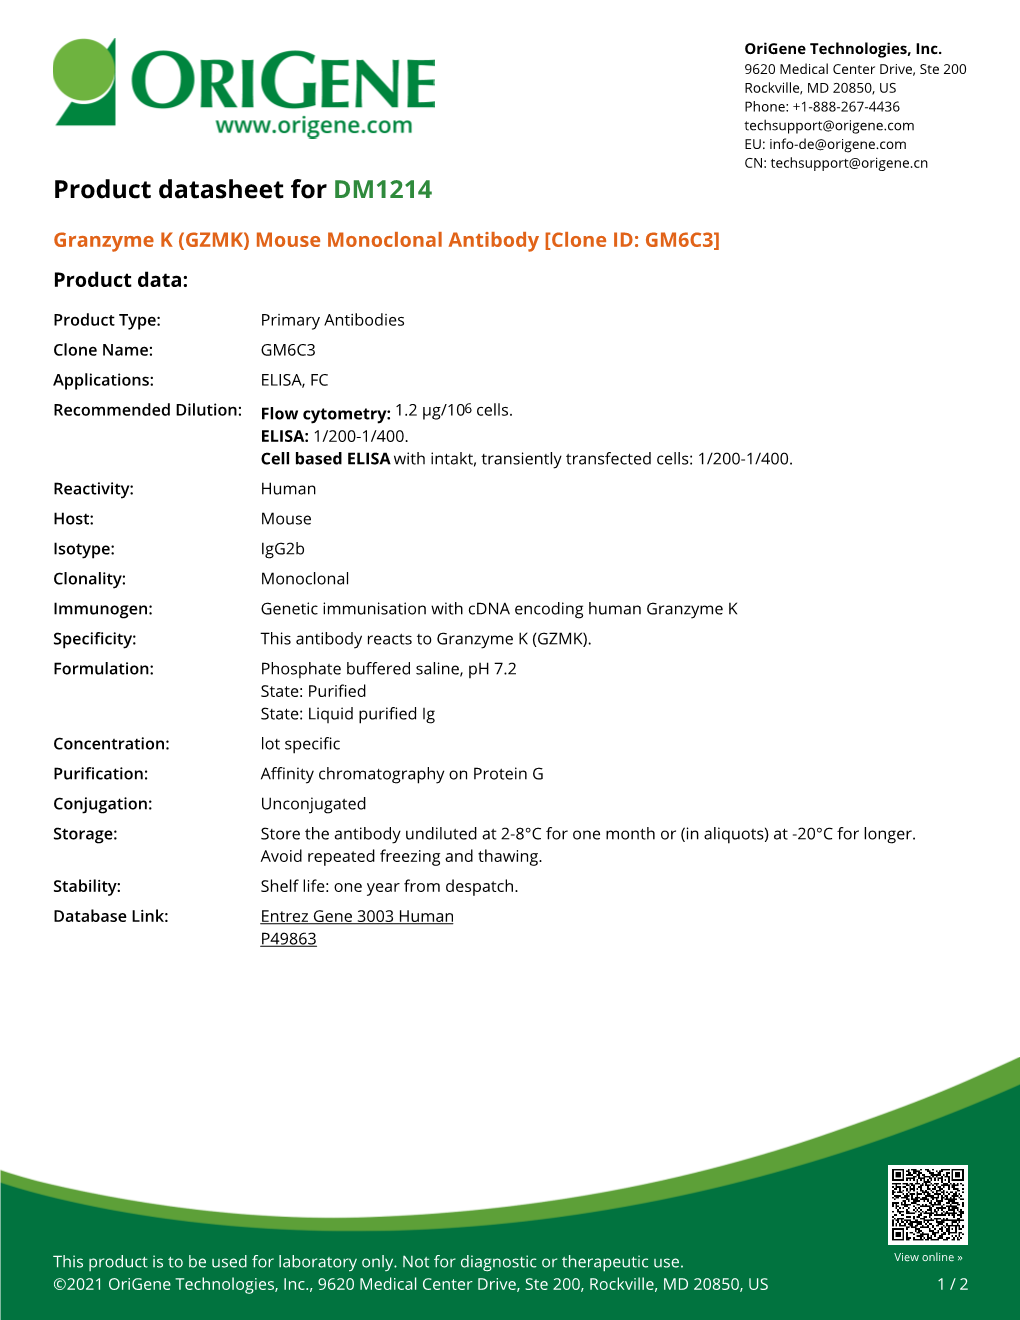 Granzyme K (GZMK) Mouse Monoclonal Antibody [Clone ID: GM6C3] Product Data